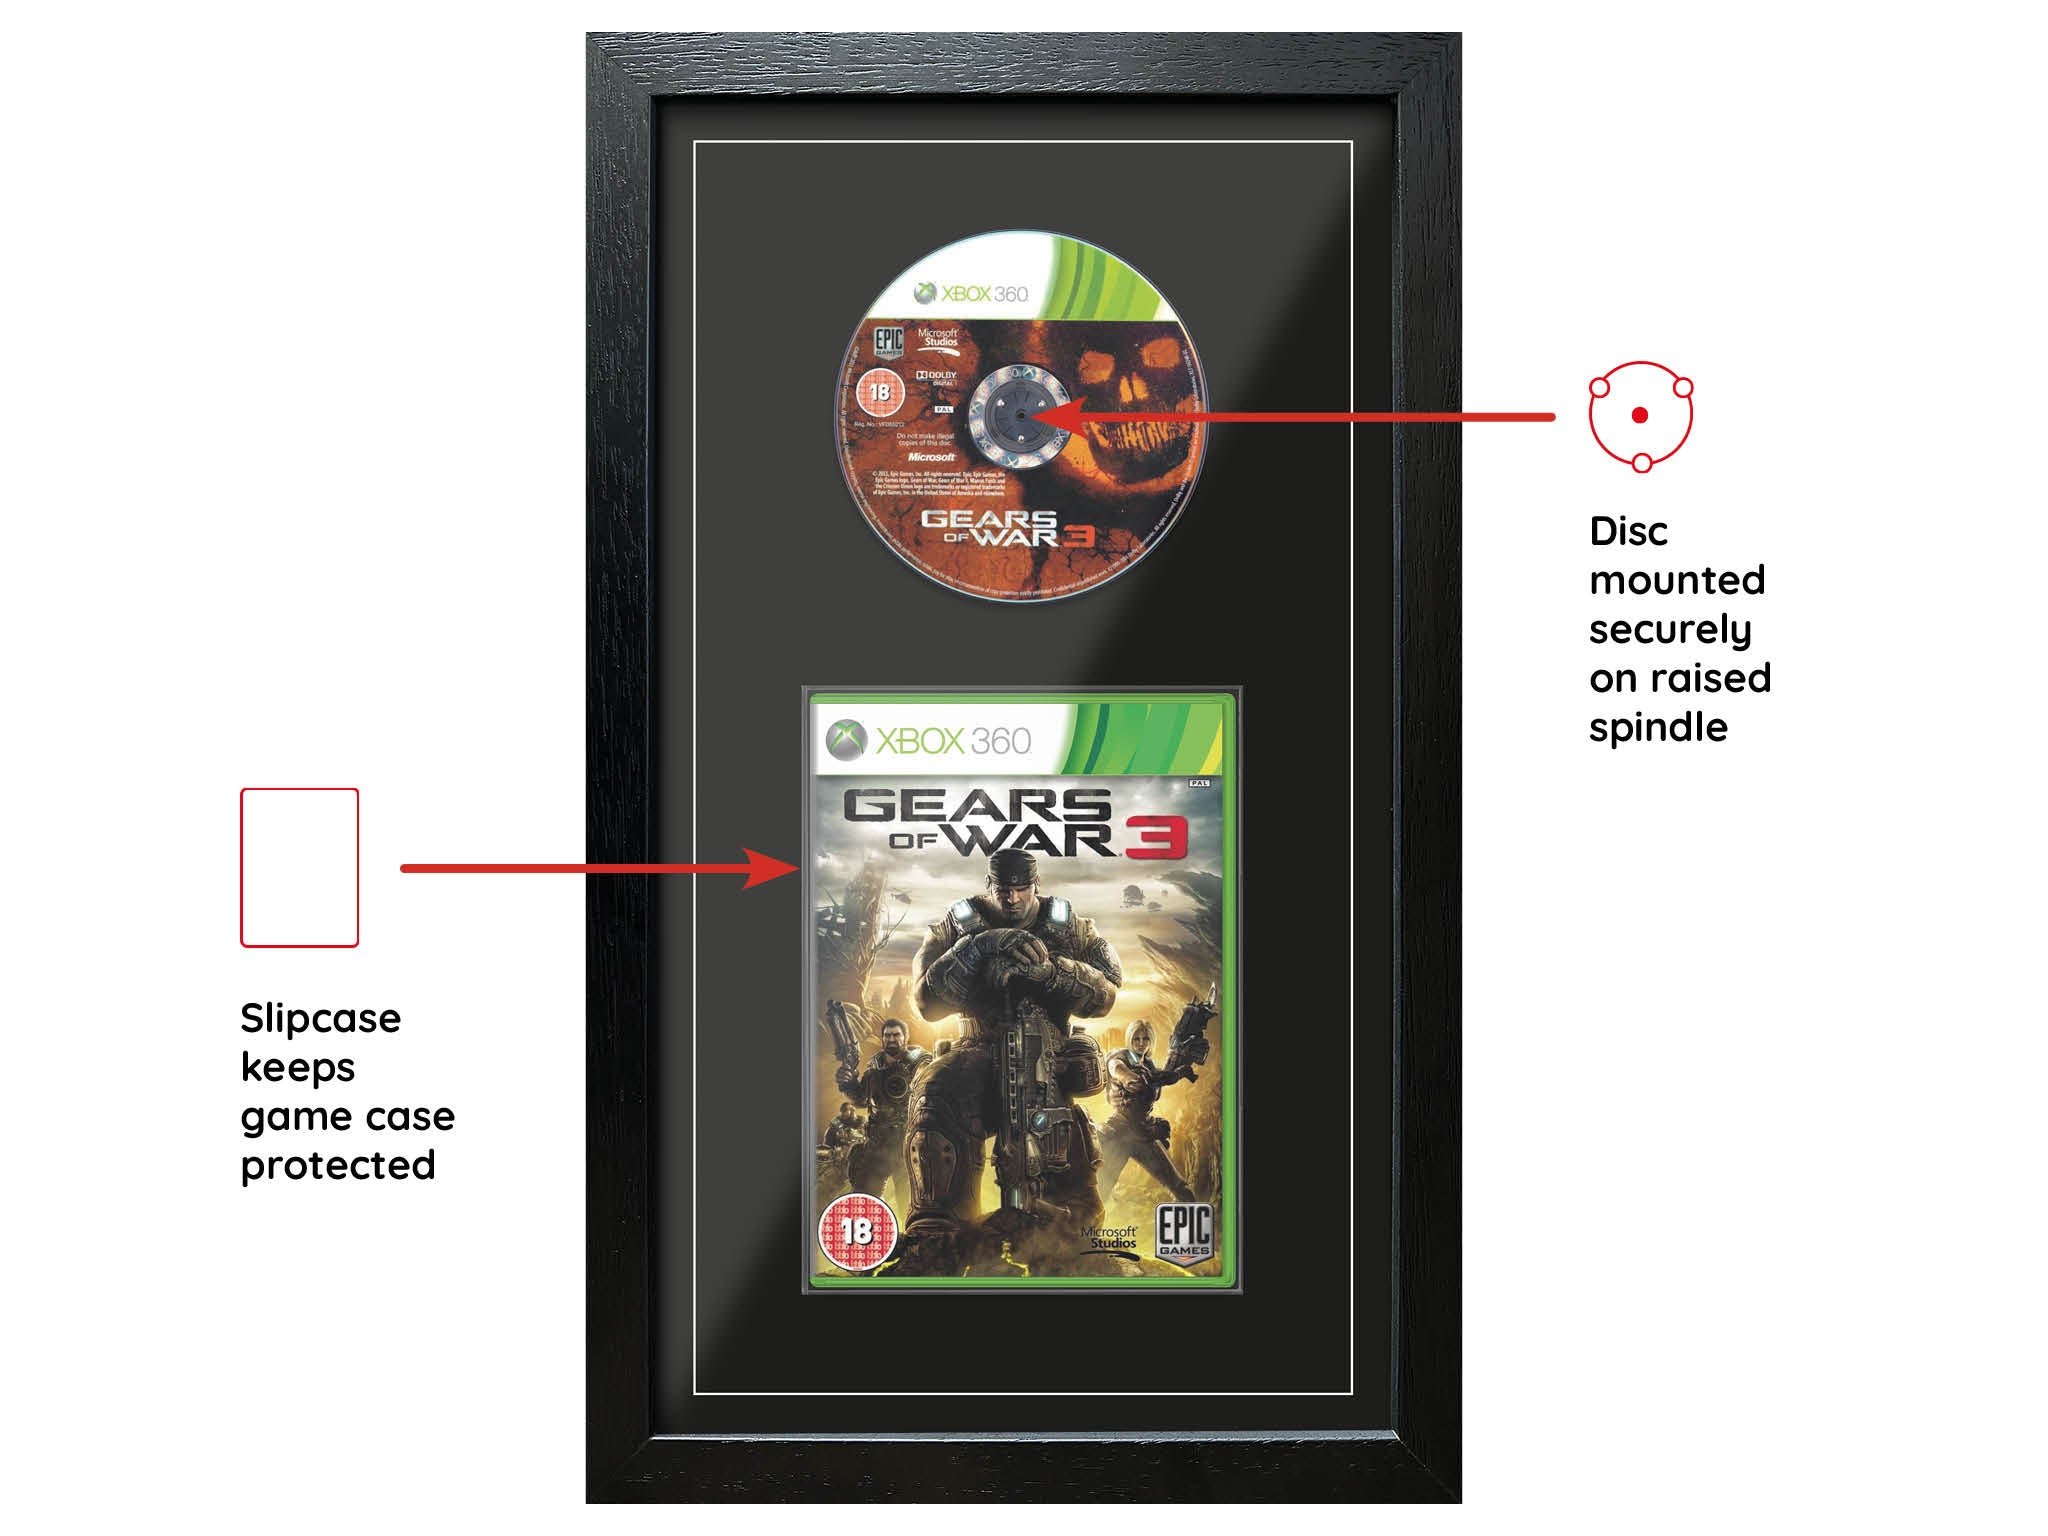 Gears of War 3 (Exhibition Range) Framed Game - Frame-A-Game